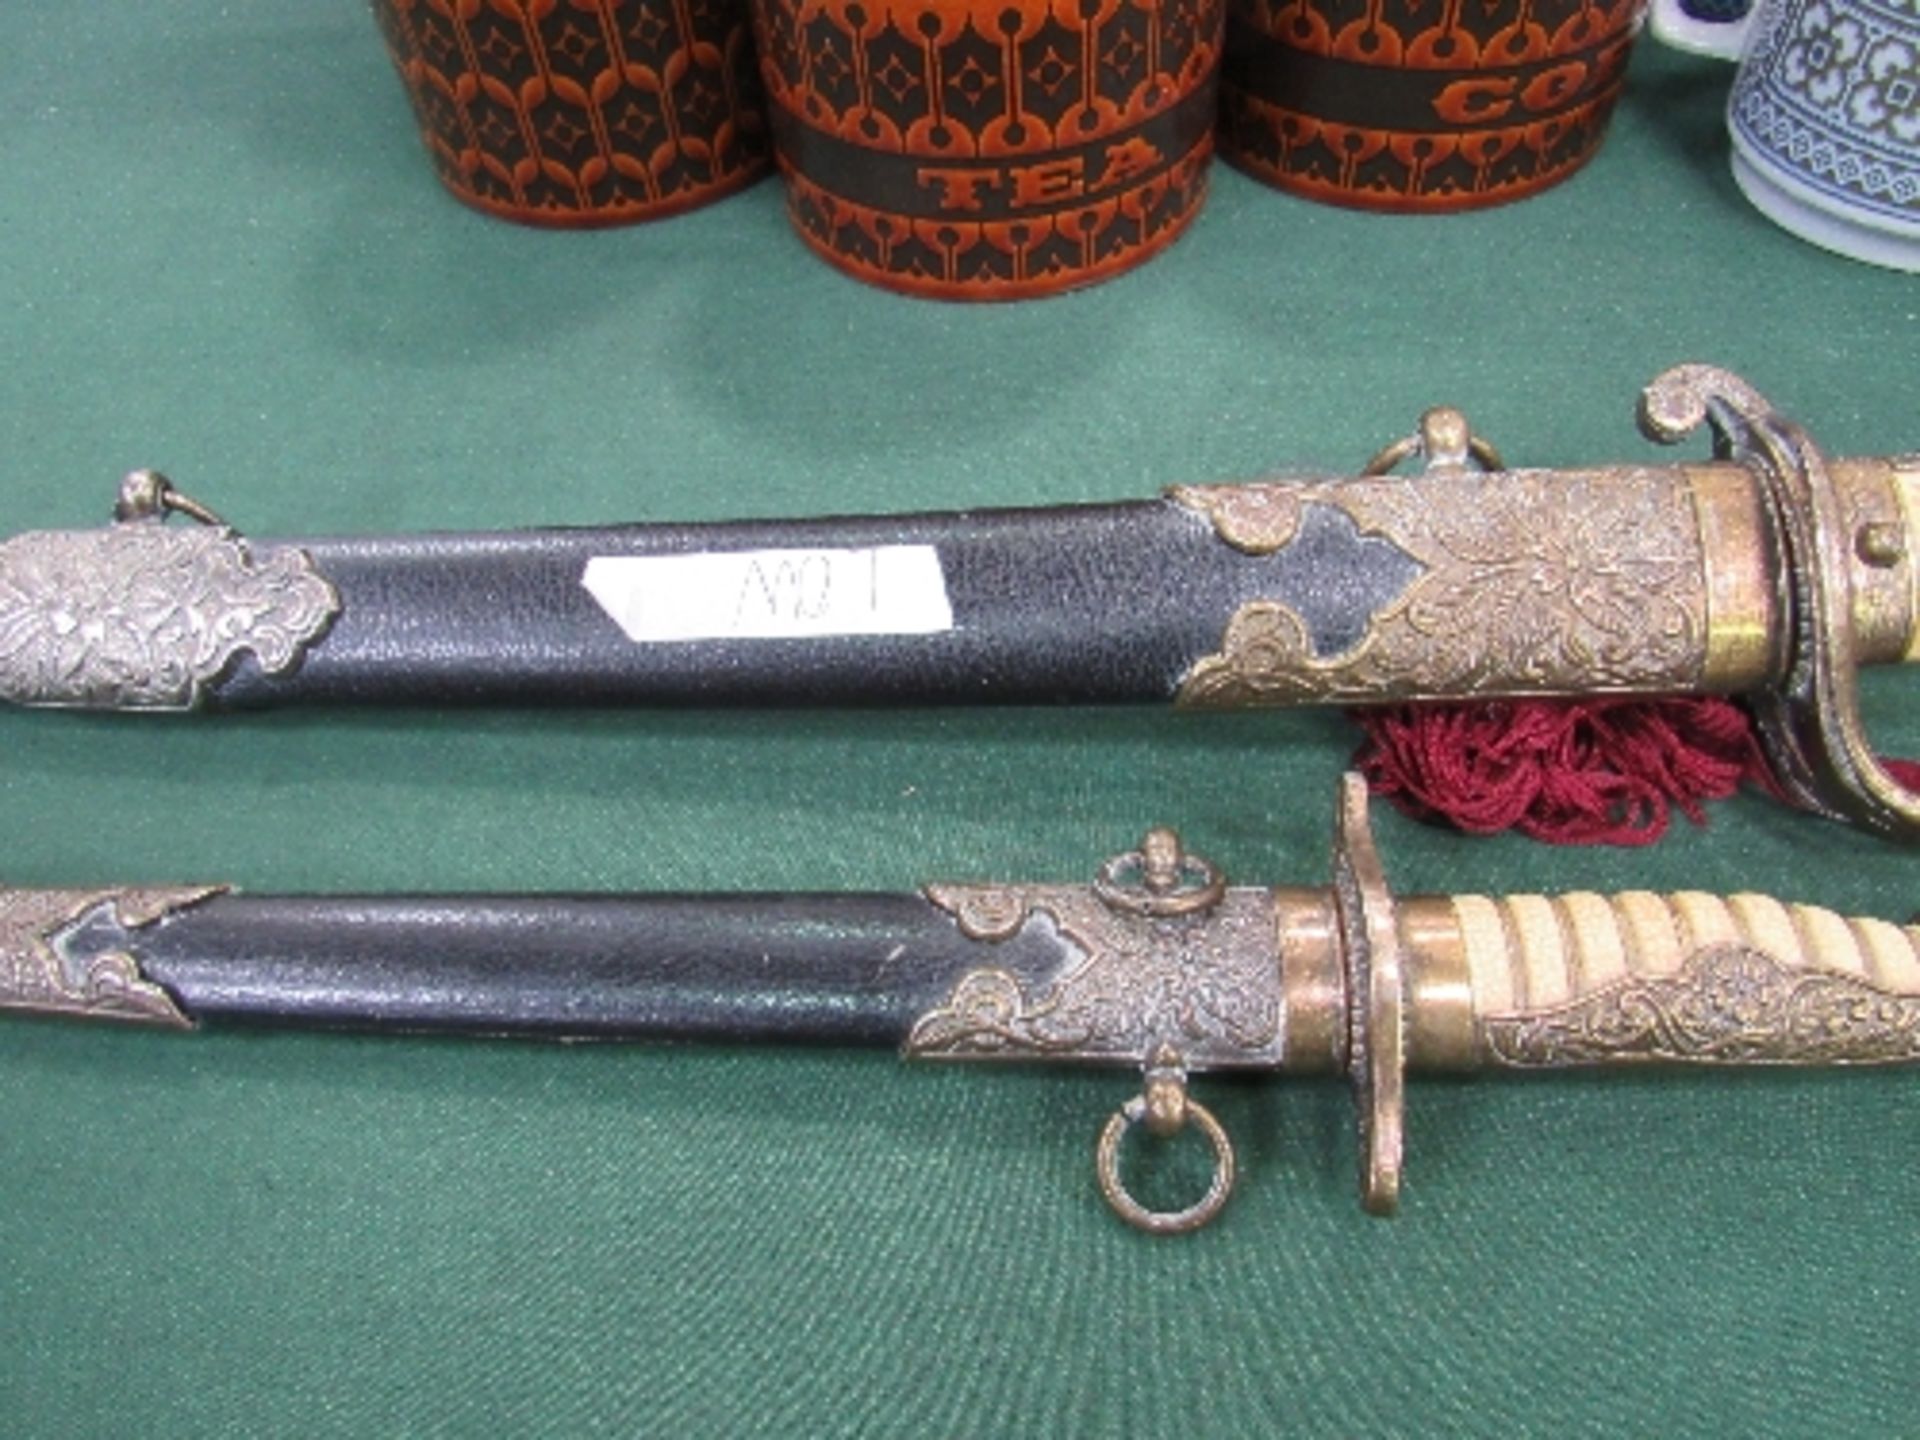 Ceremonial naval sword & dagger. Estimate £30-50. - Image 3 of 3